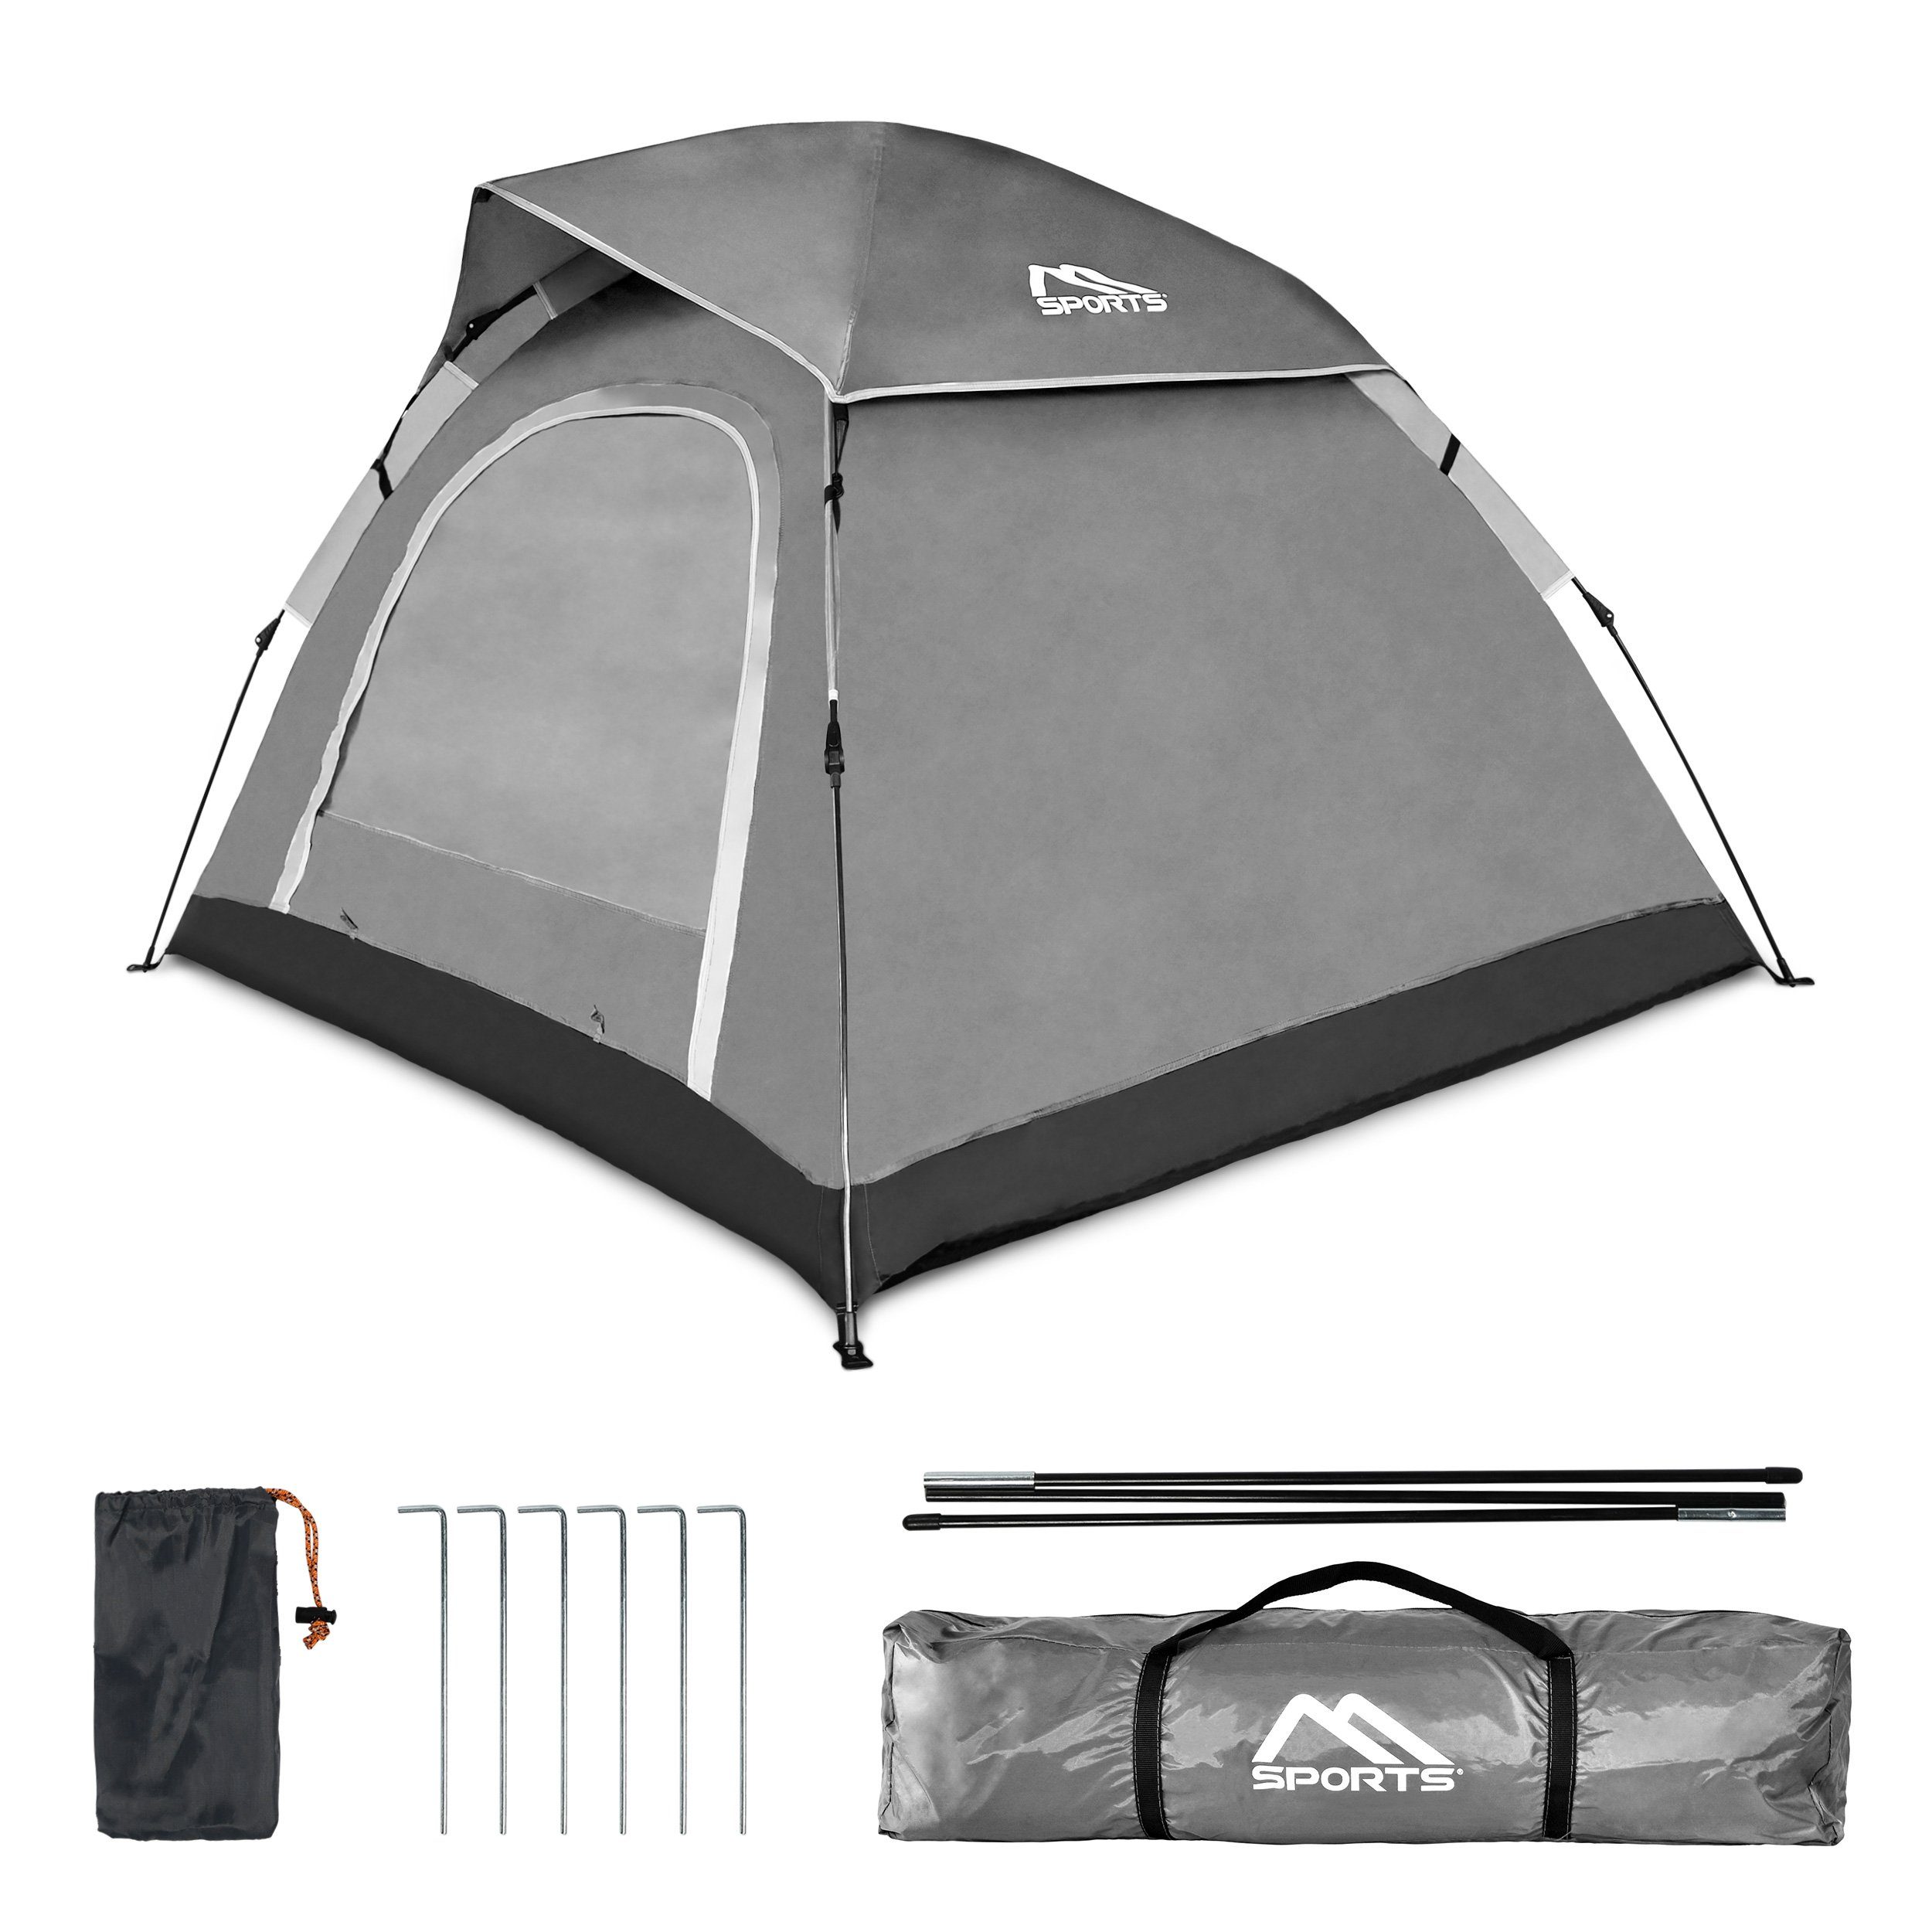 MSports® Igluzelt Campingzelt Pop Up Zelt 2-3 Personen Würfelzelt Wasserdicht Winddicht Kuppelzelt Zelt Grau